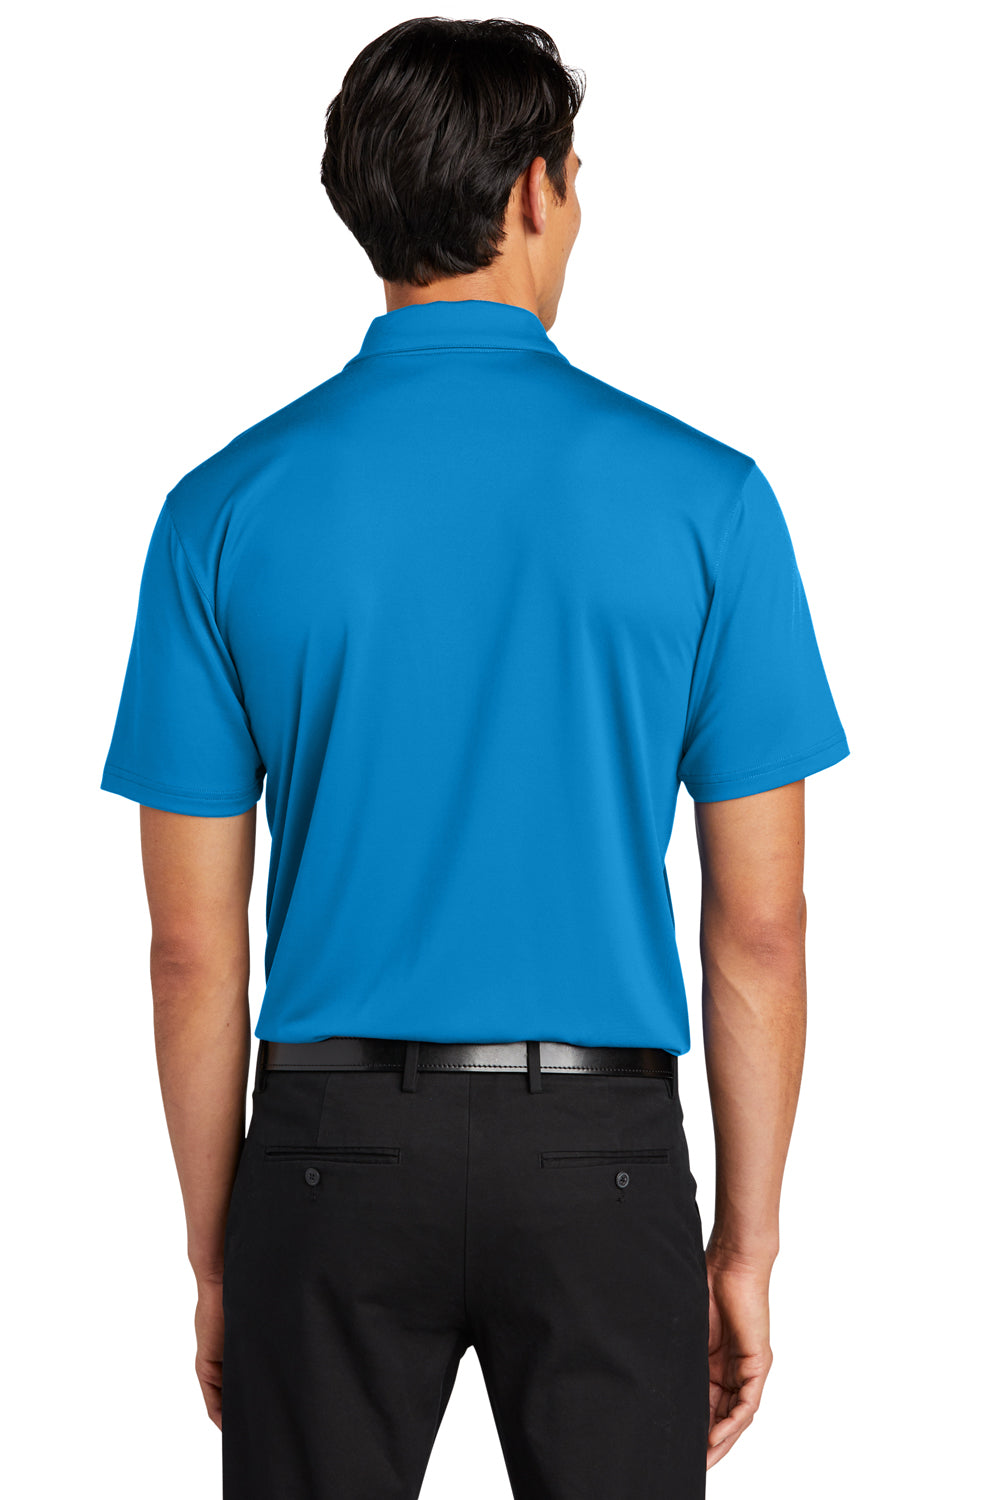 Port Authority K398 Staff Performance Short Sleeve Polo Shirt Brilliant Blue Back